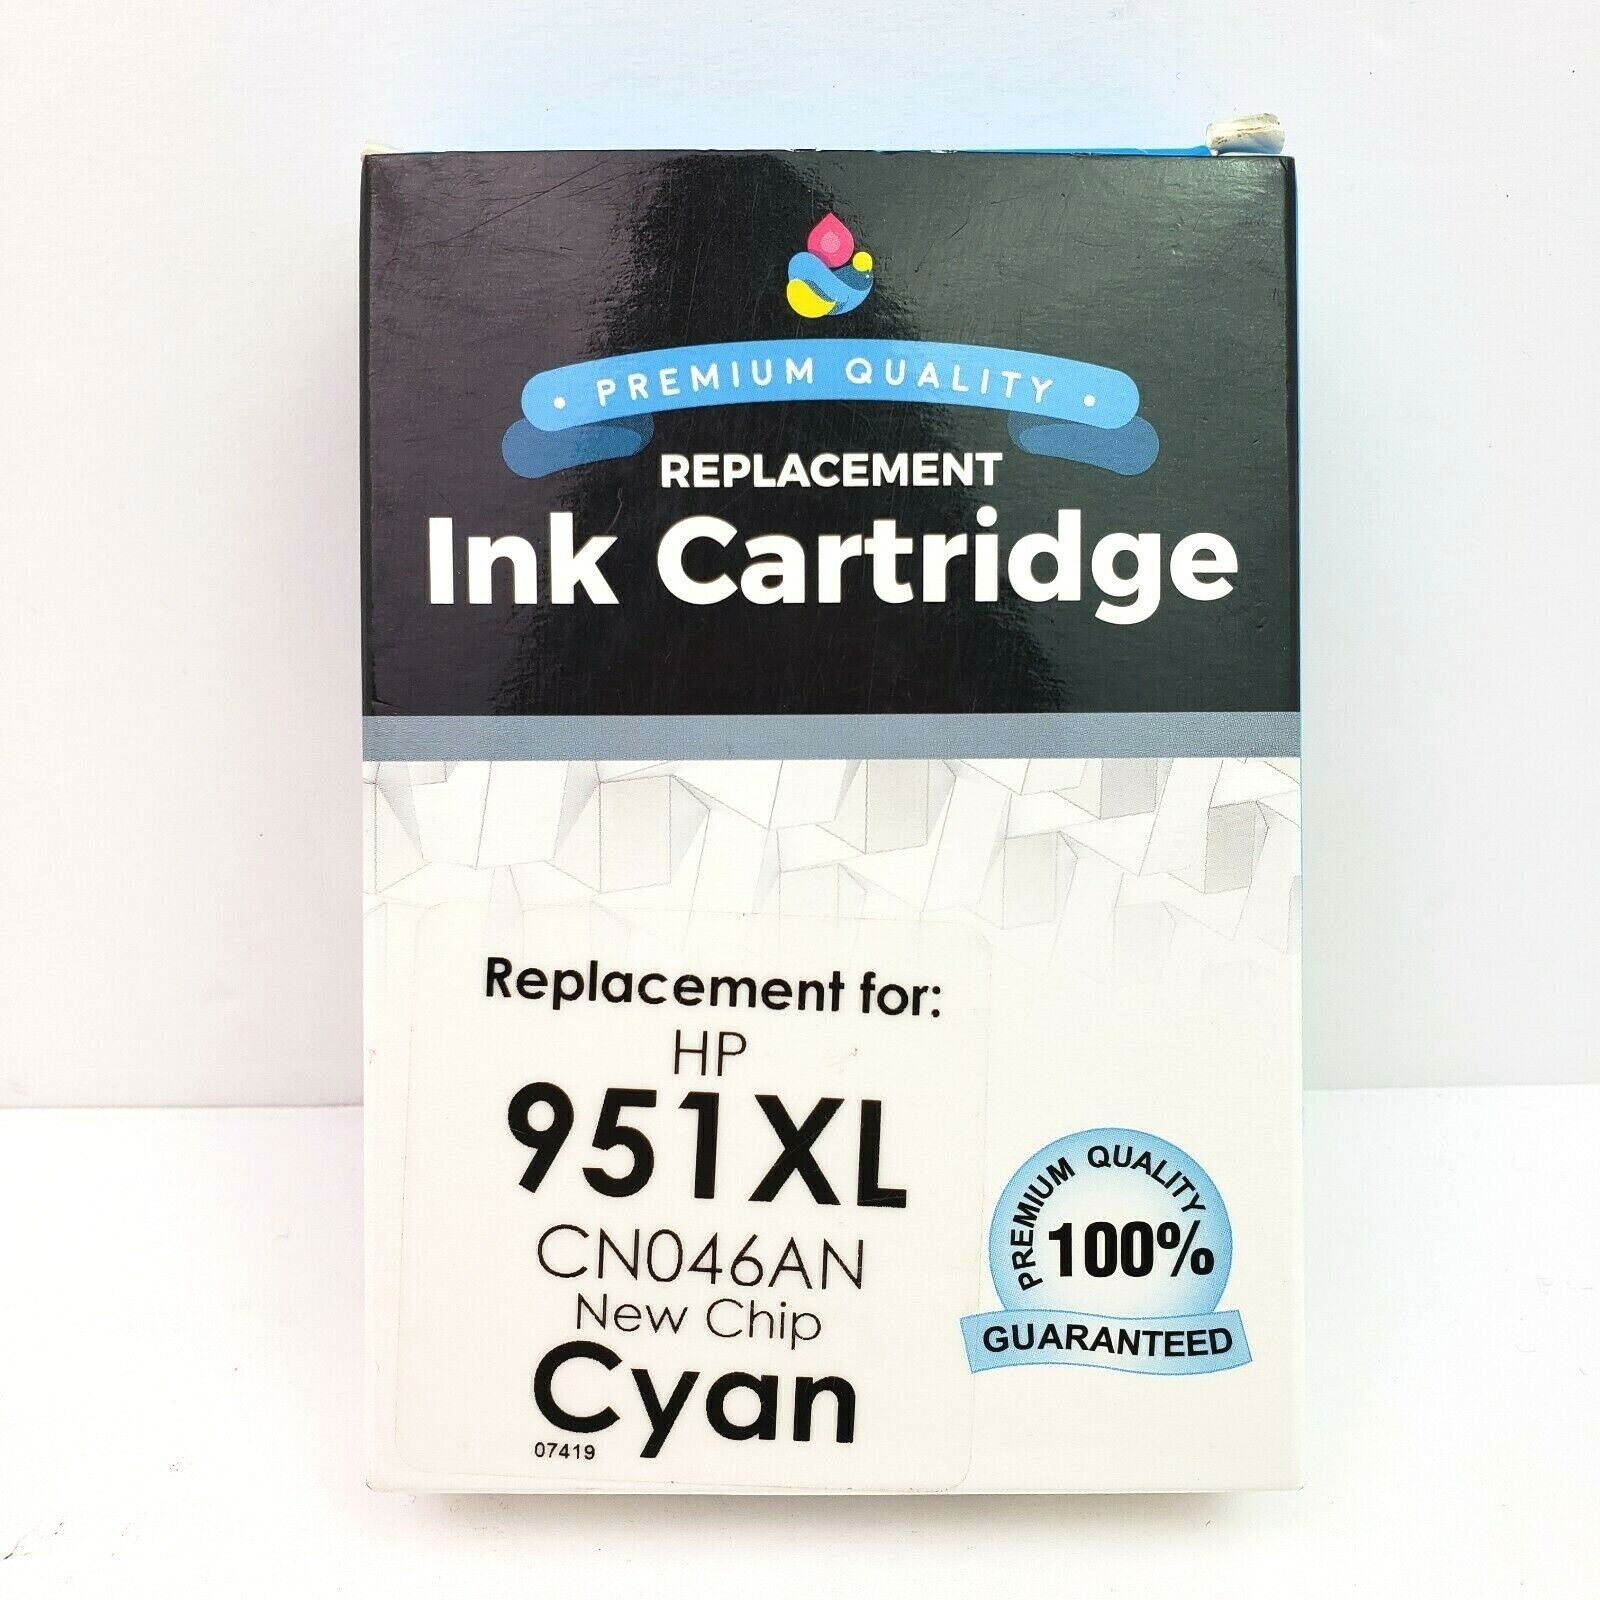 Premium Quality Replacement Printer Ink Cartridge Cyan CN046AN